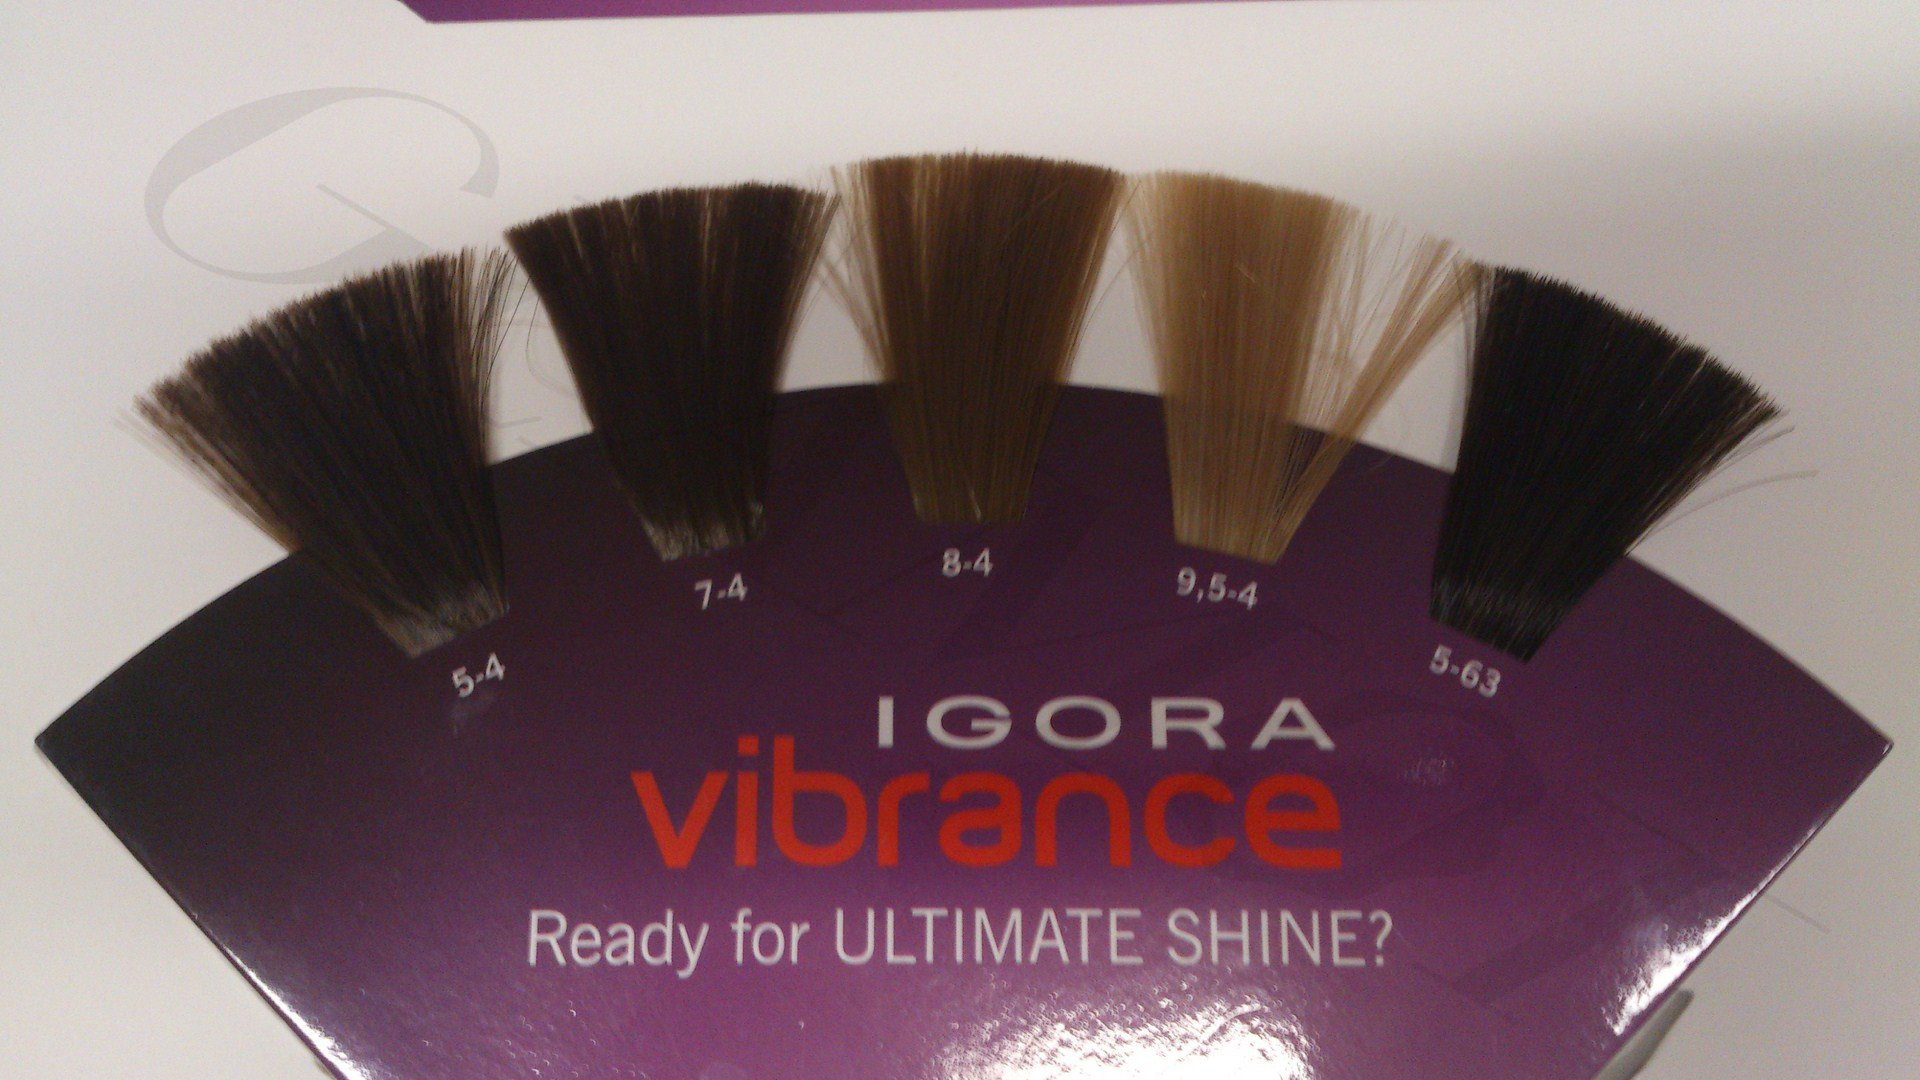 5. Schwarzkopf Professional Igora Vibrance Demi-Permanent Hair Color in Blueberry - wide 6